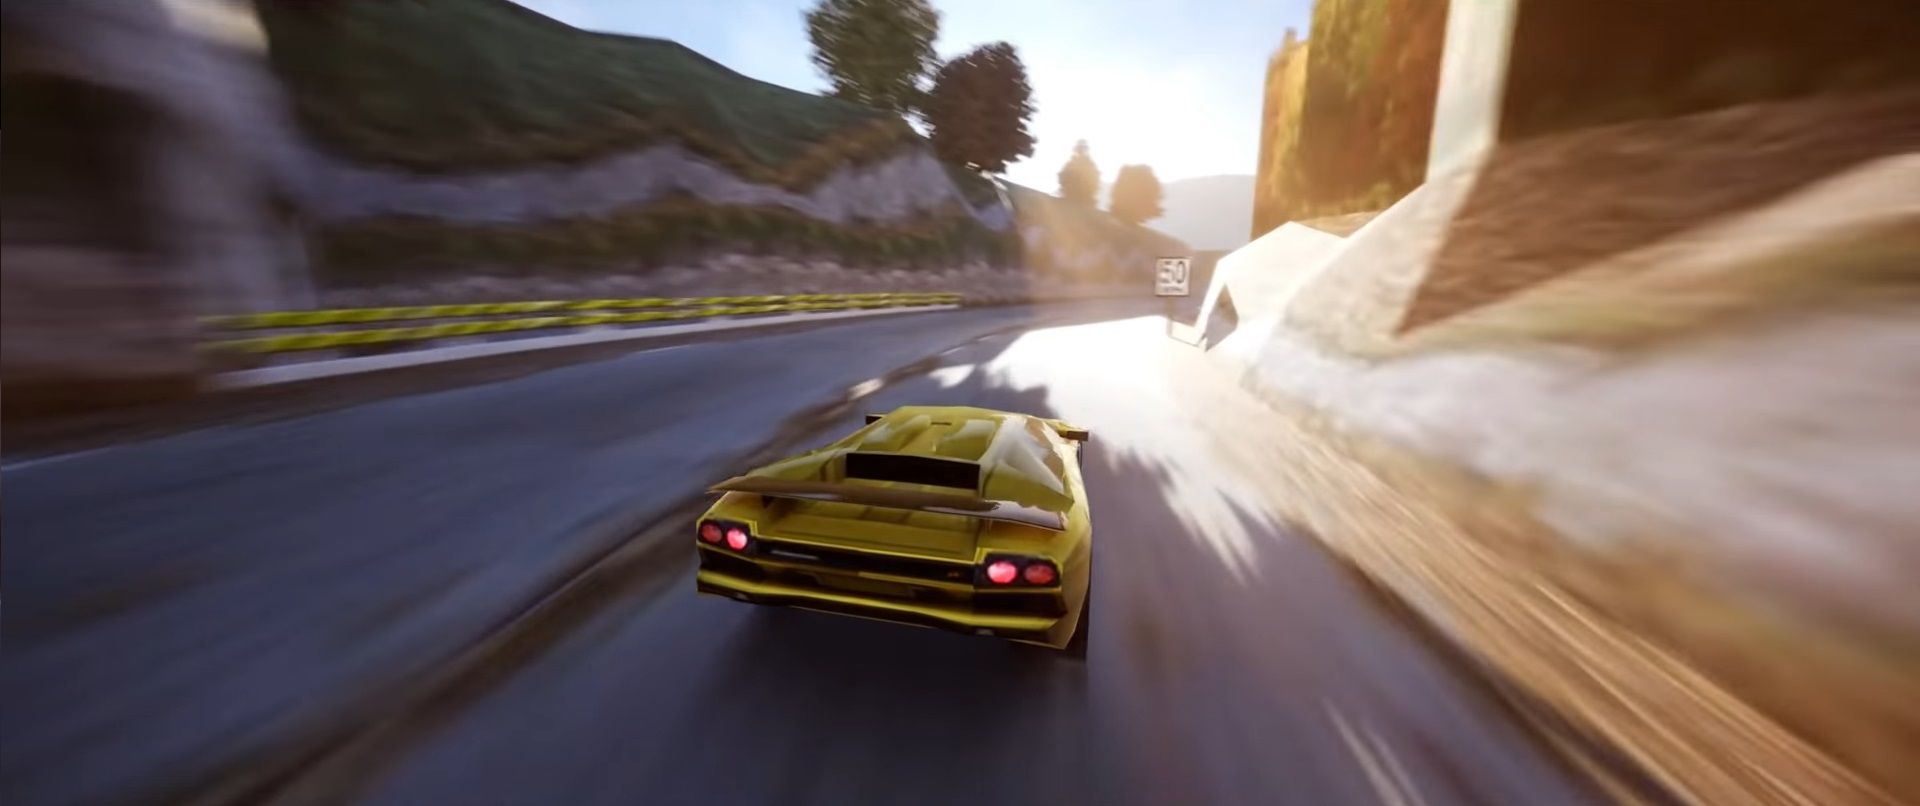 Need For Speed 3 in Unreal Engine 5 by David Kerekes